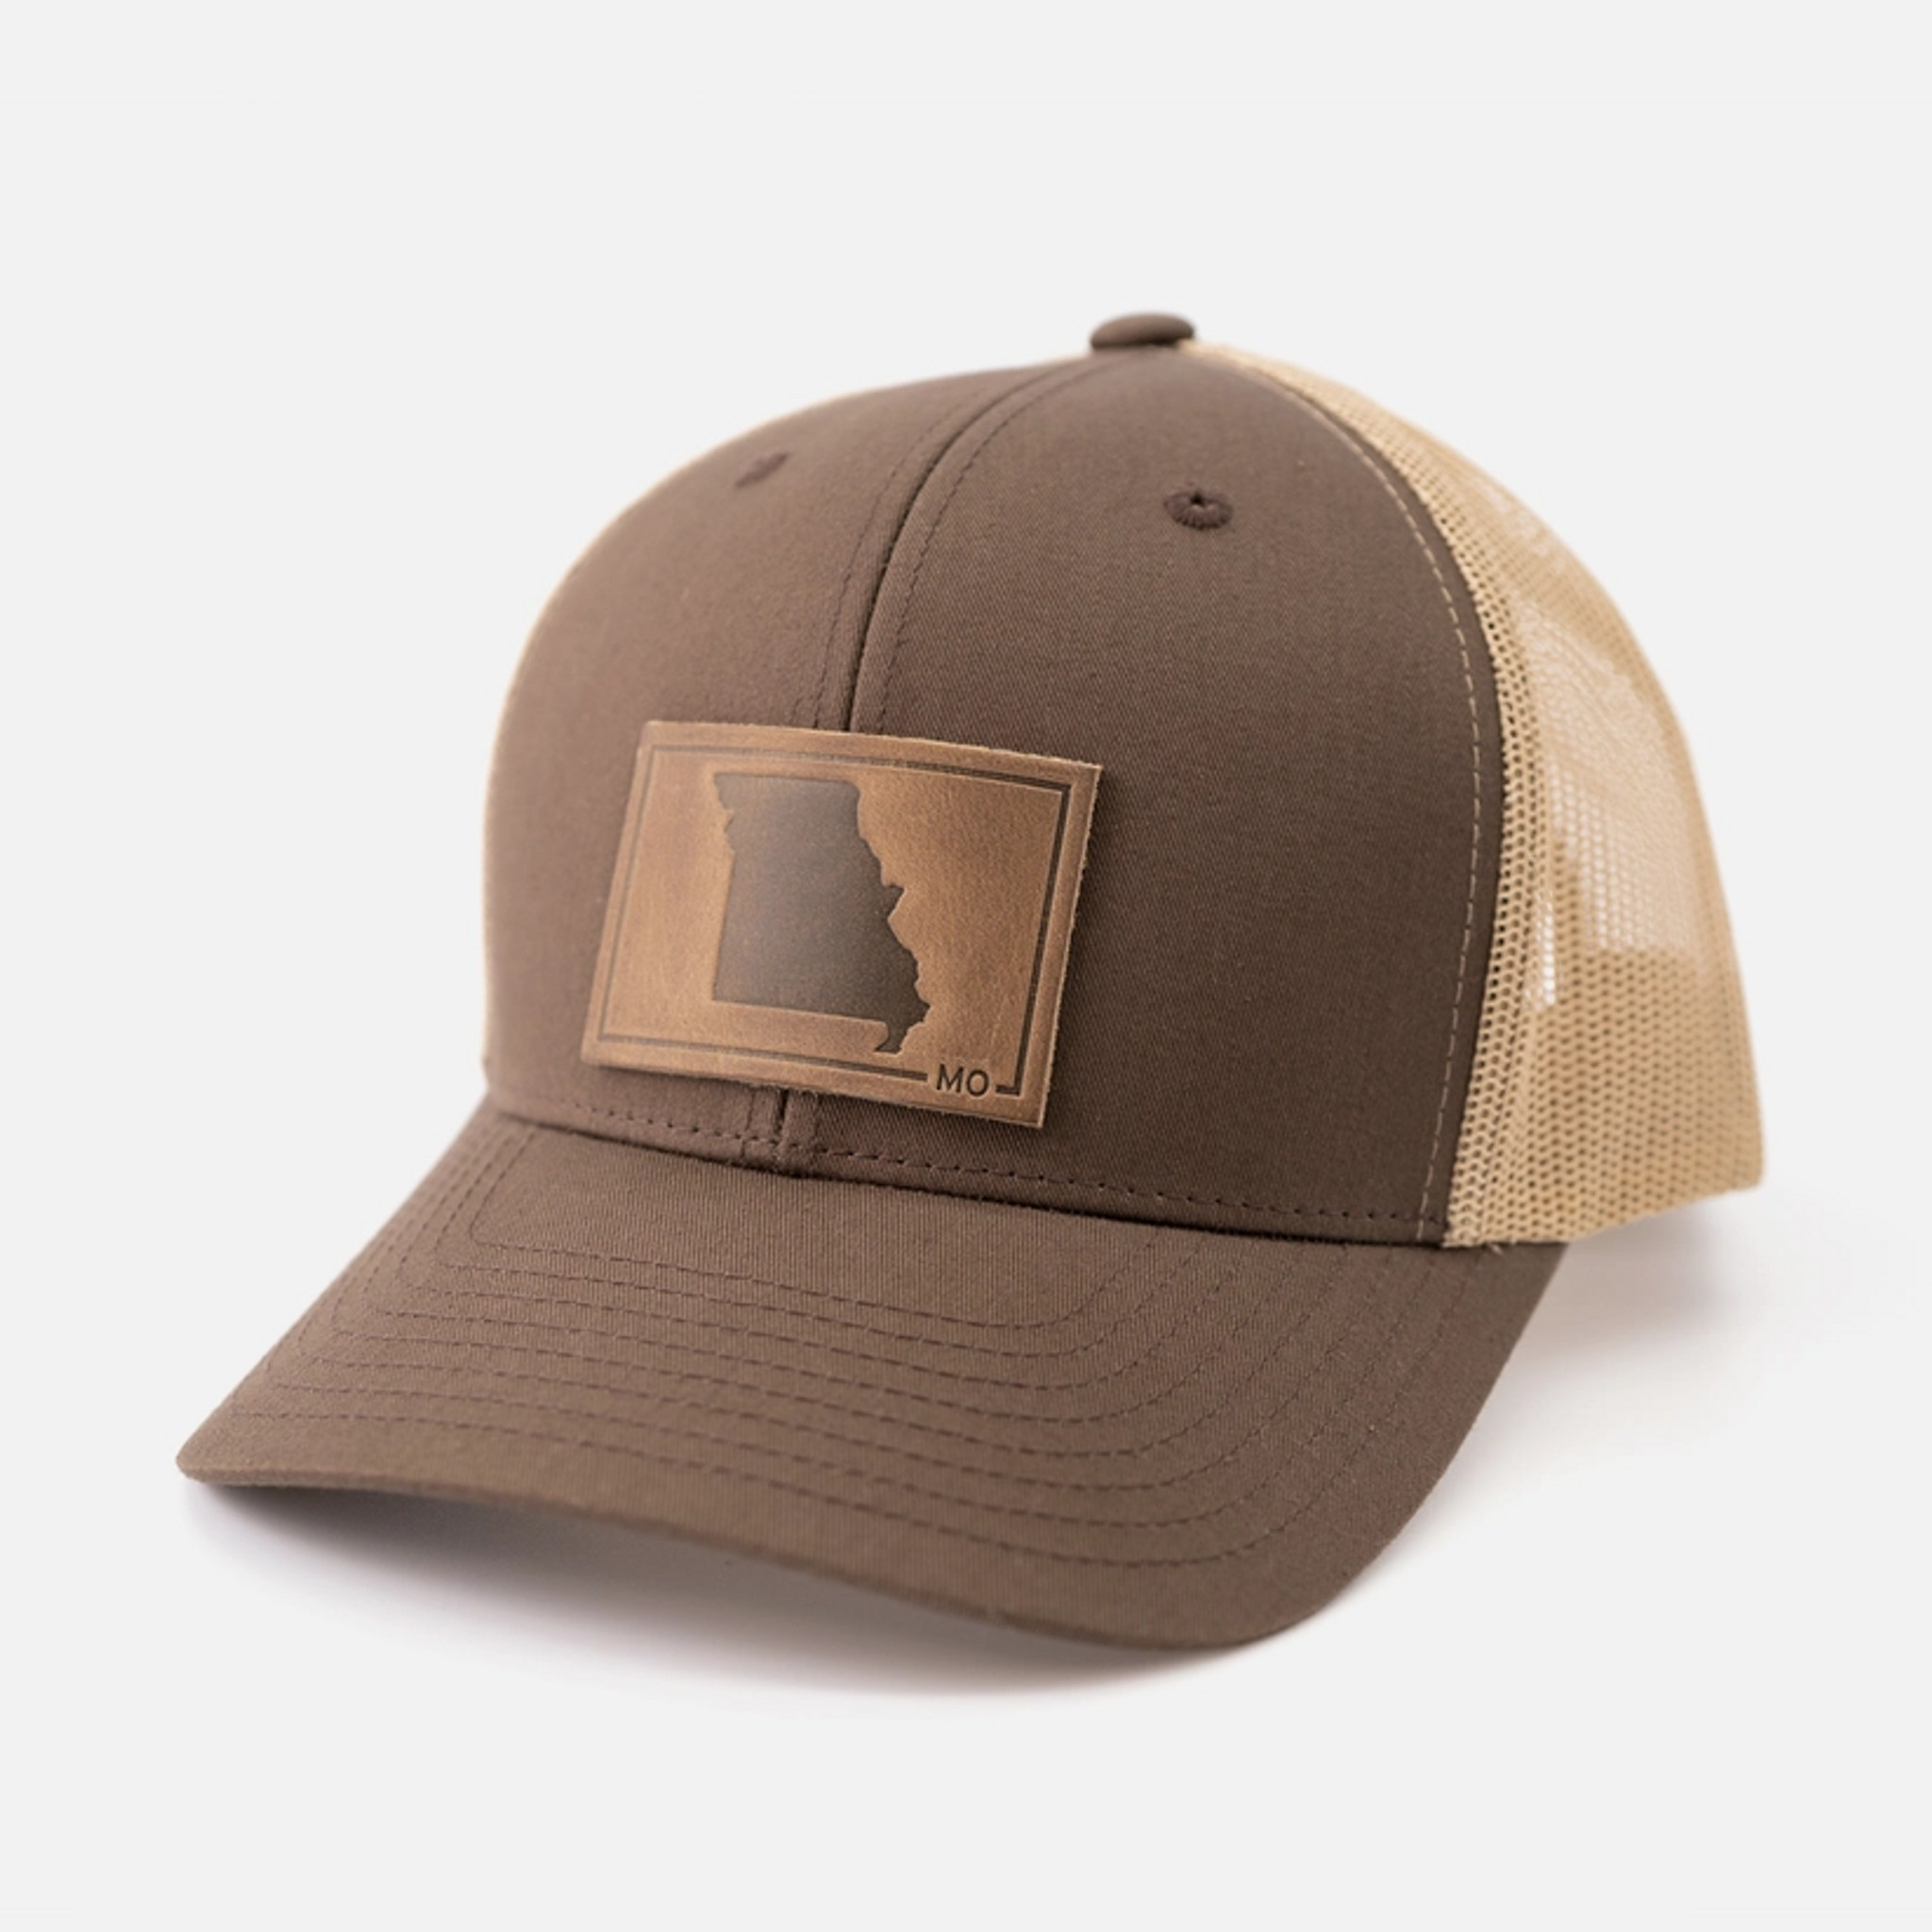 Brown & Khaki Leather Missouri Patch hat